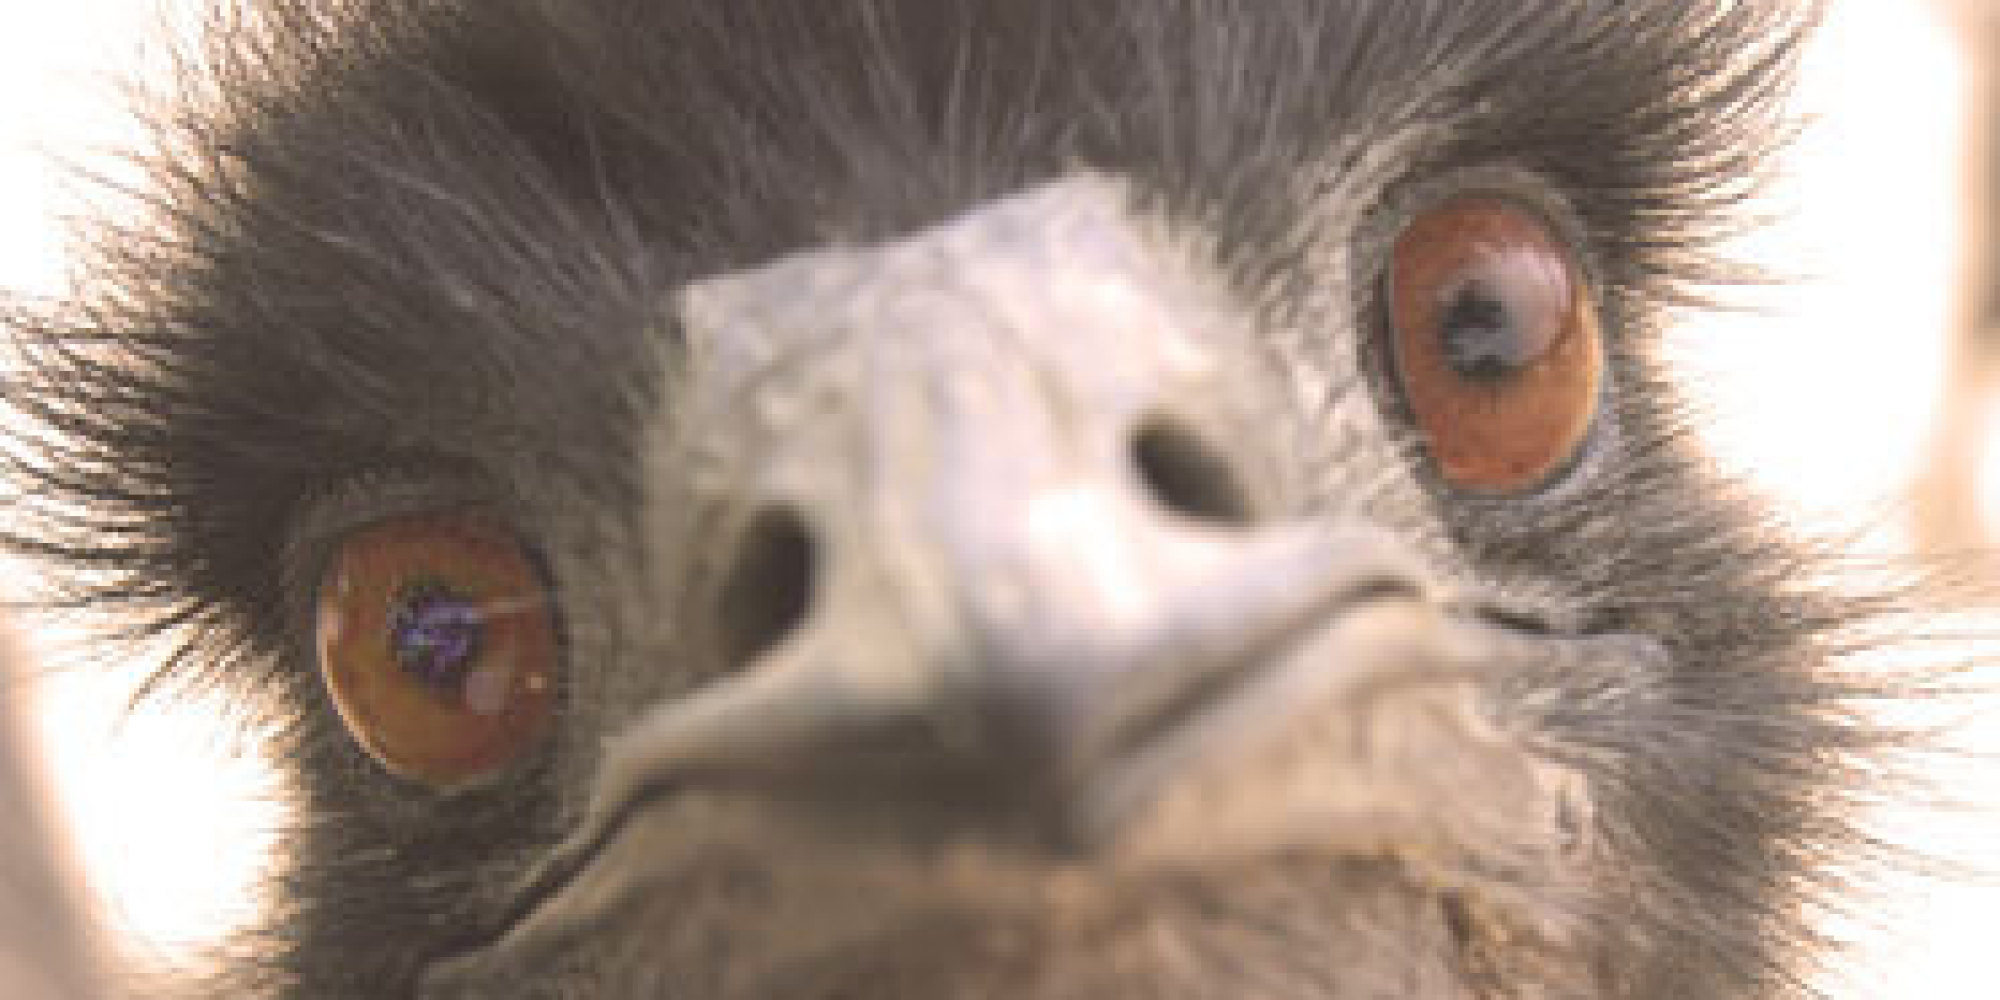 Nice Images Collection: Emu Desktop Wallpapers